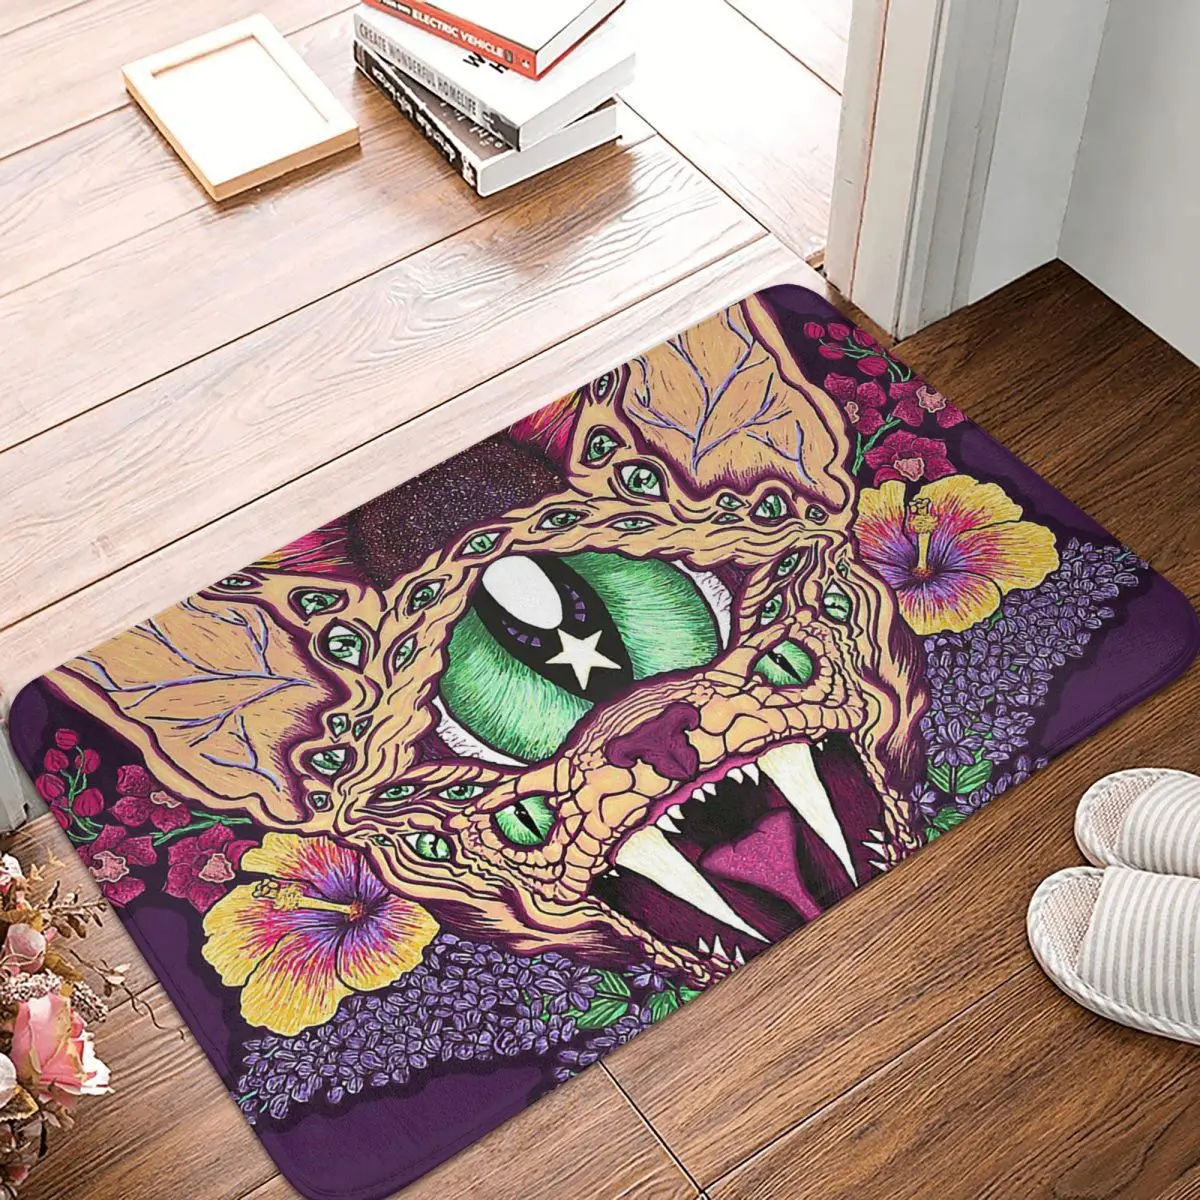 

DnD Game Bath Non-Slip Carpet Cobra Kitty Beholder Flannel Mat Entrance Door Doormat Floor Decoration Rug